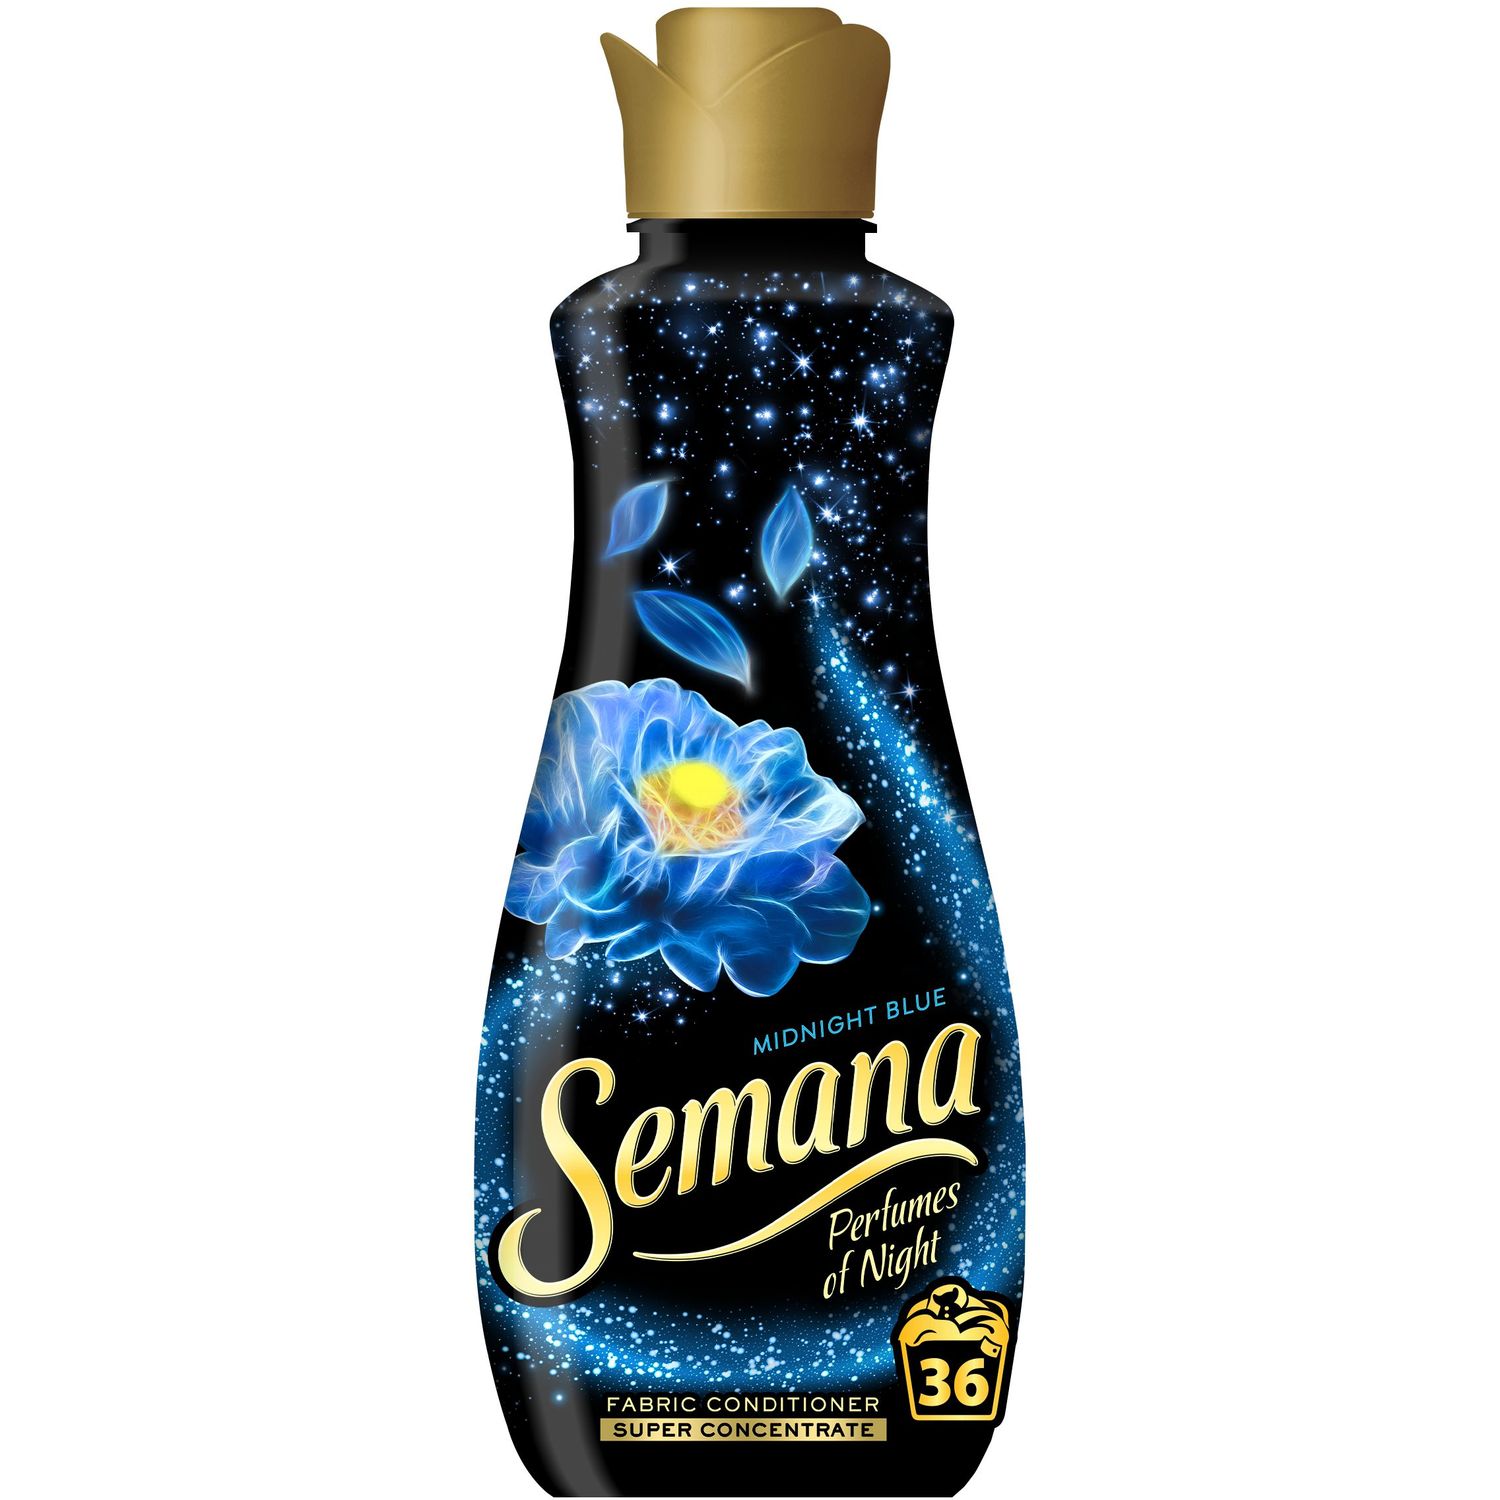 Кондиционер для белья Semana Perfumes of Night Midnight Blue 950 мл - фото 1